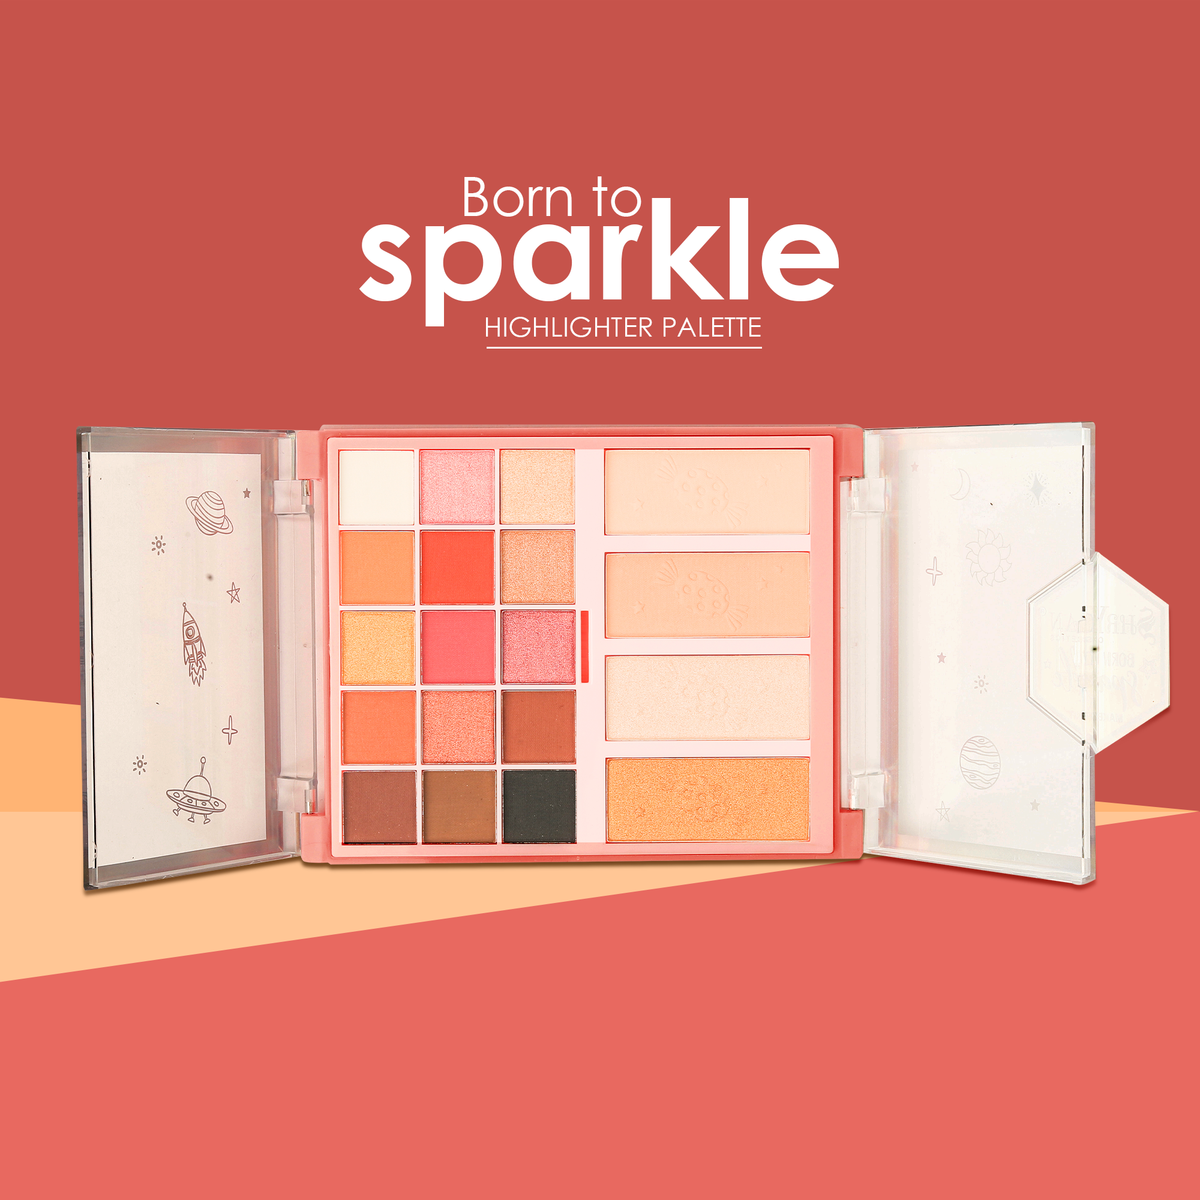 Sparkle Makeup Kit